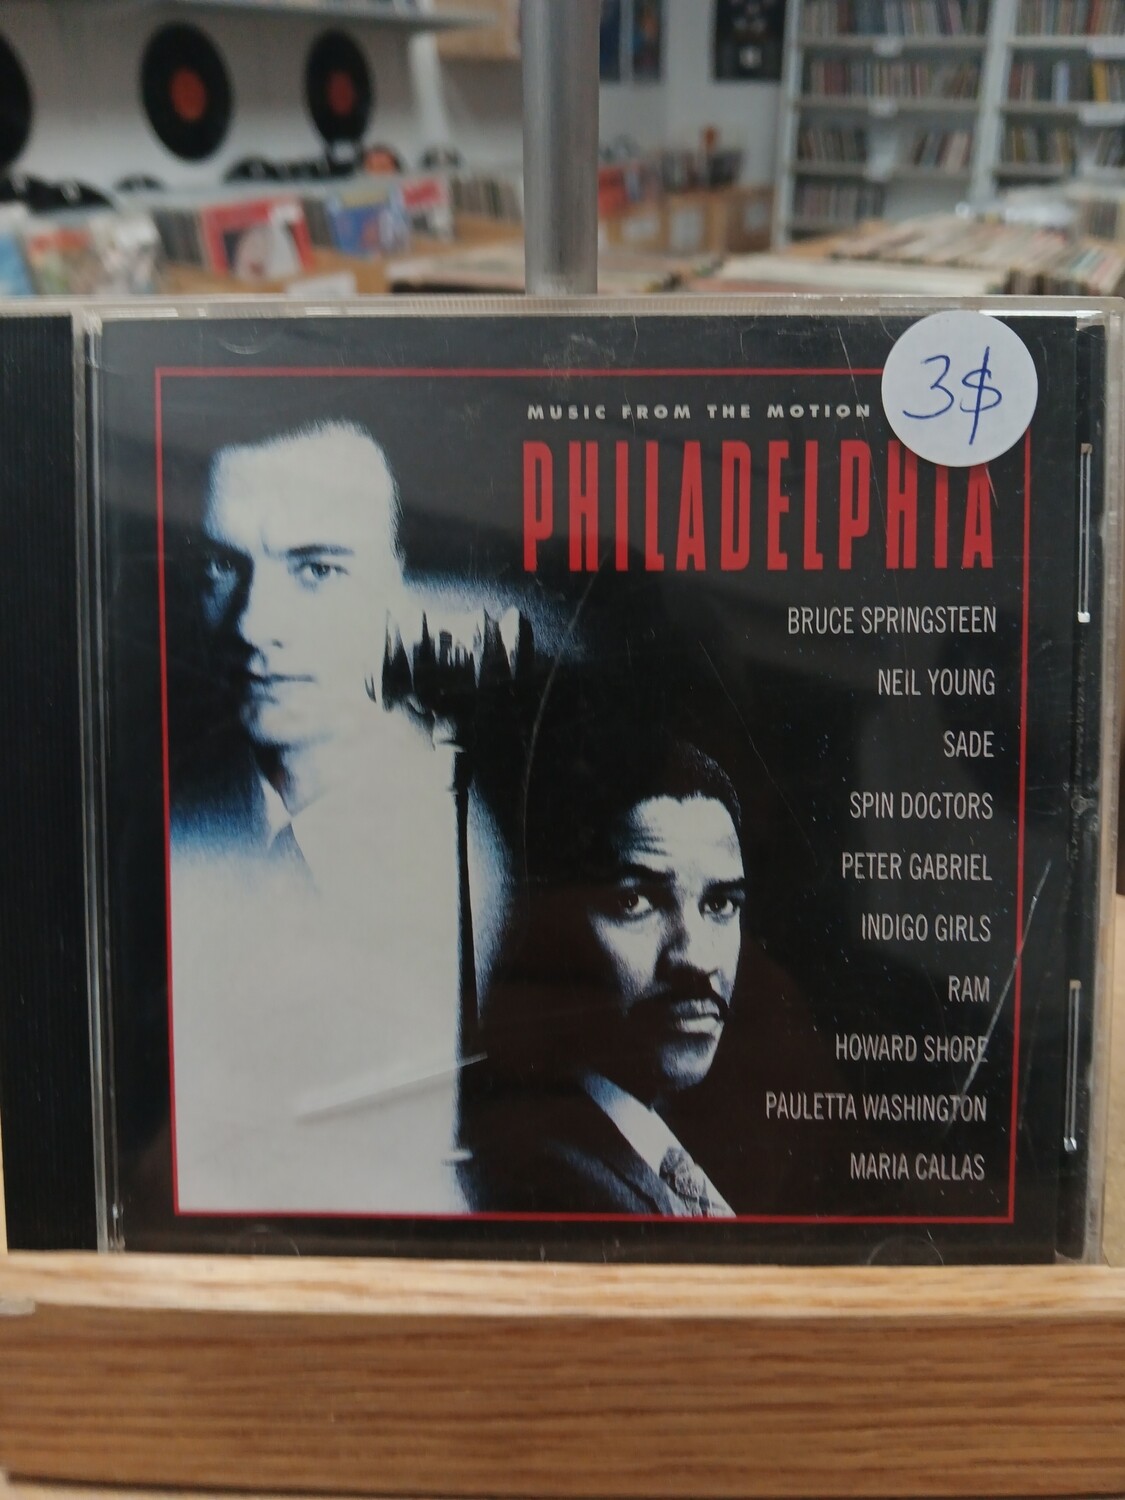 VARIOUS - Philadelphia soundtrack (CD)